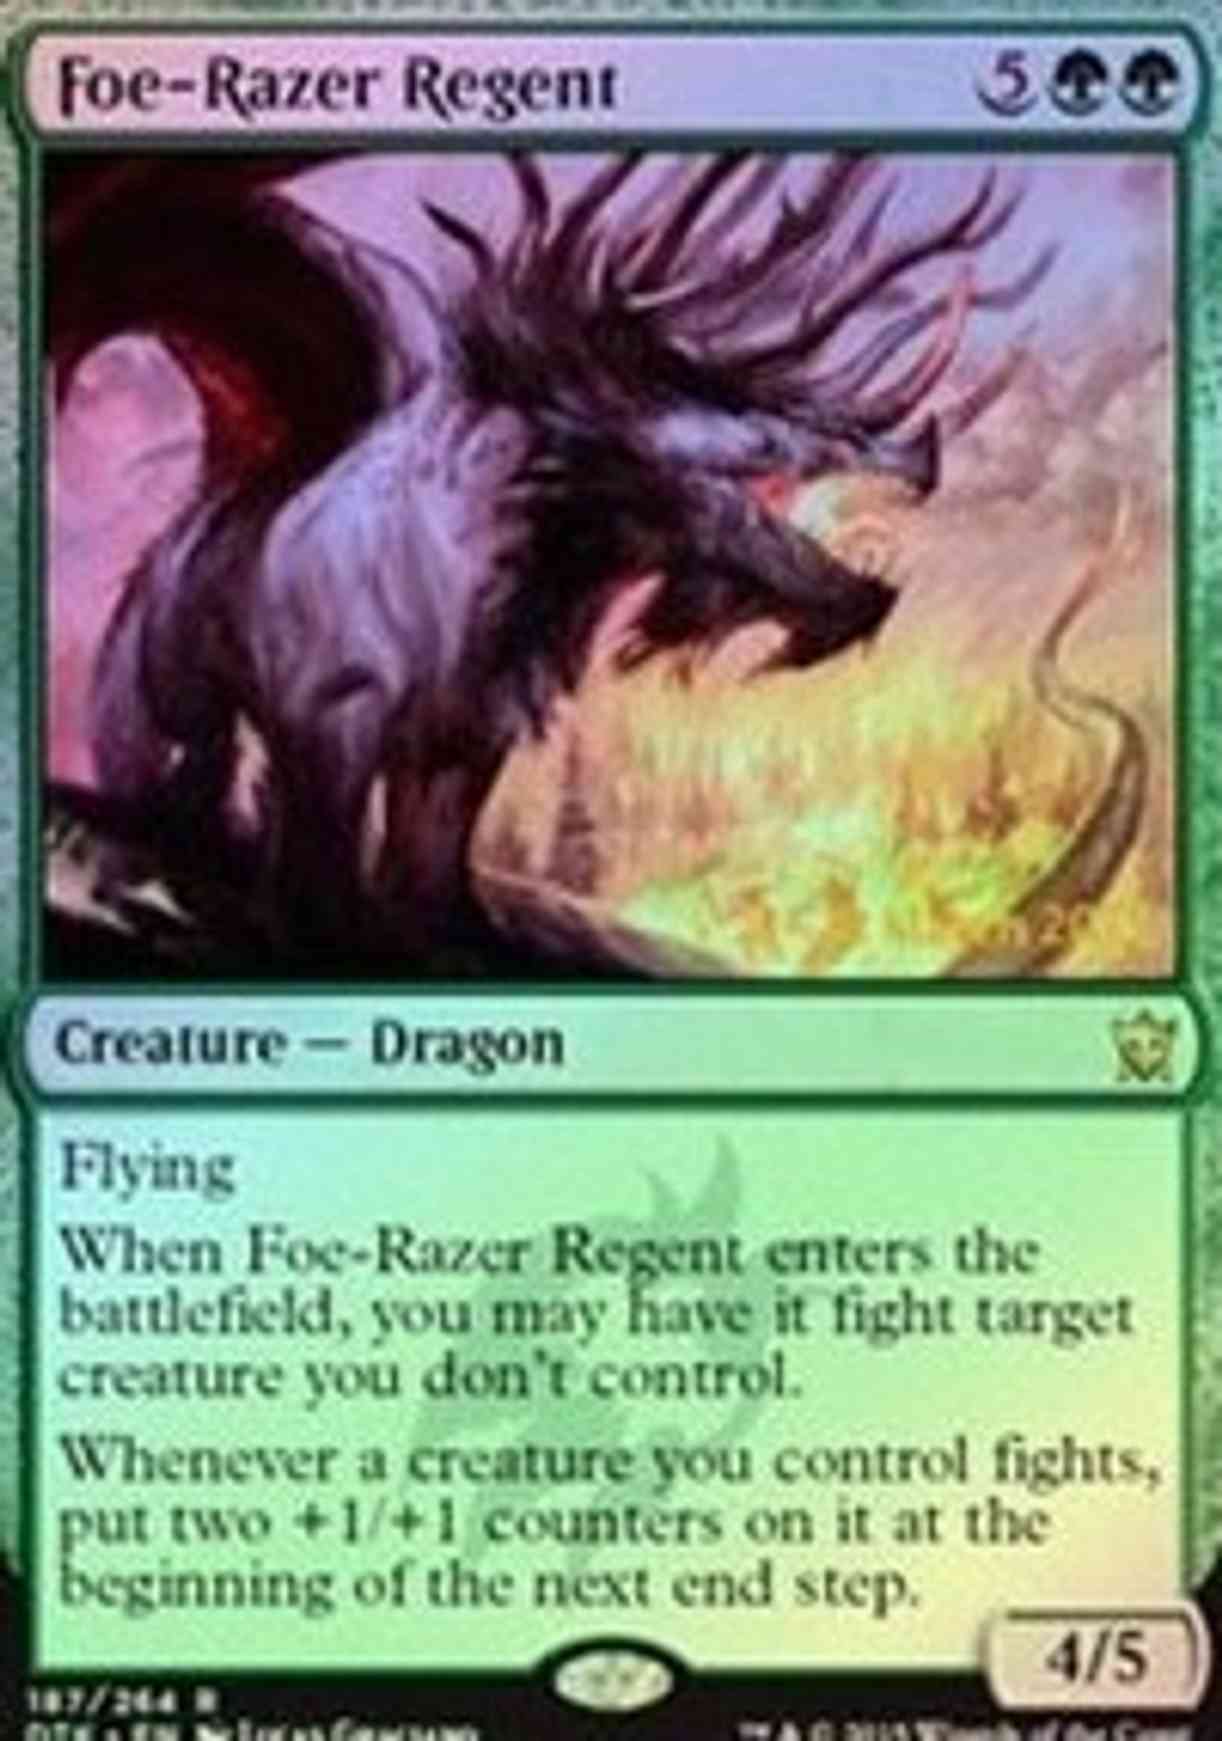 Foe-Razer Regent magic card front